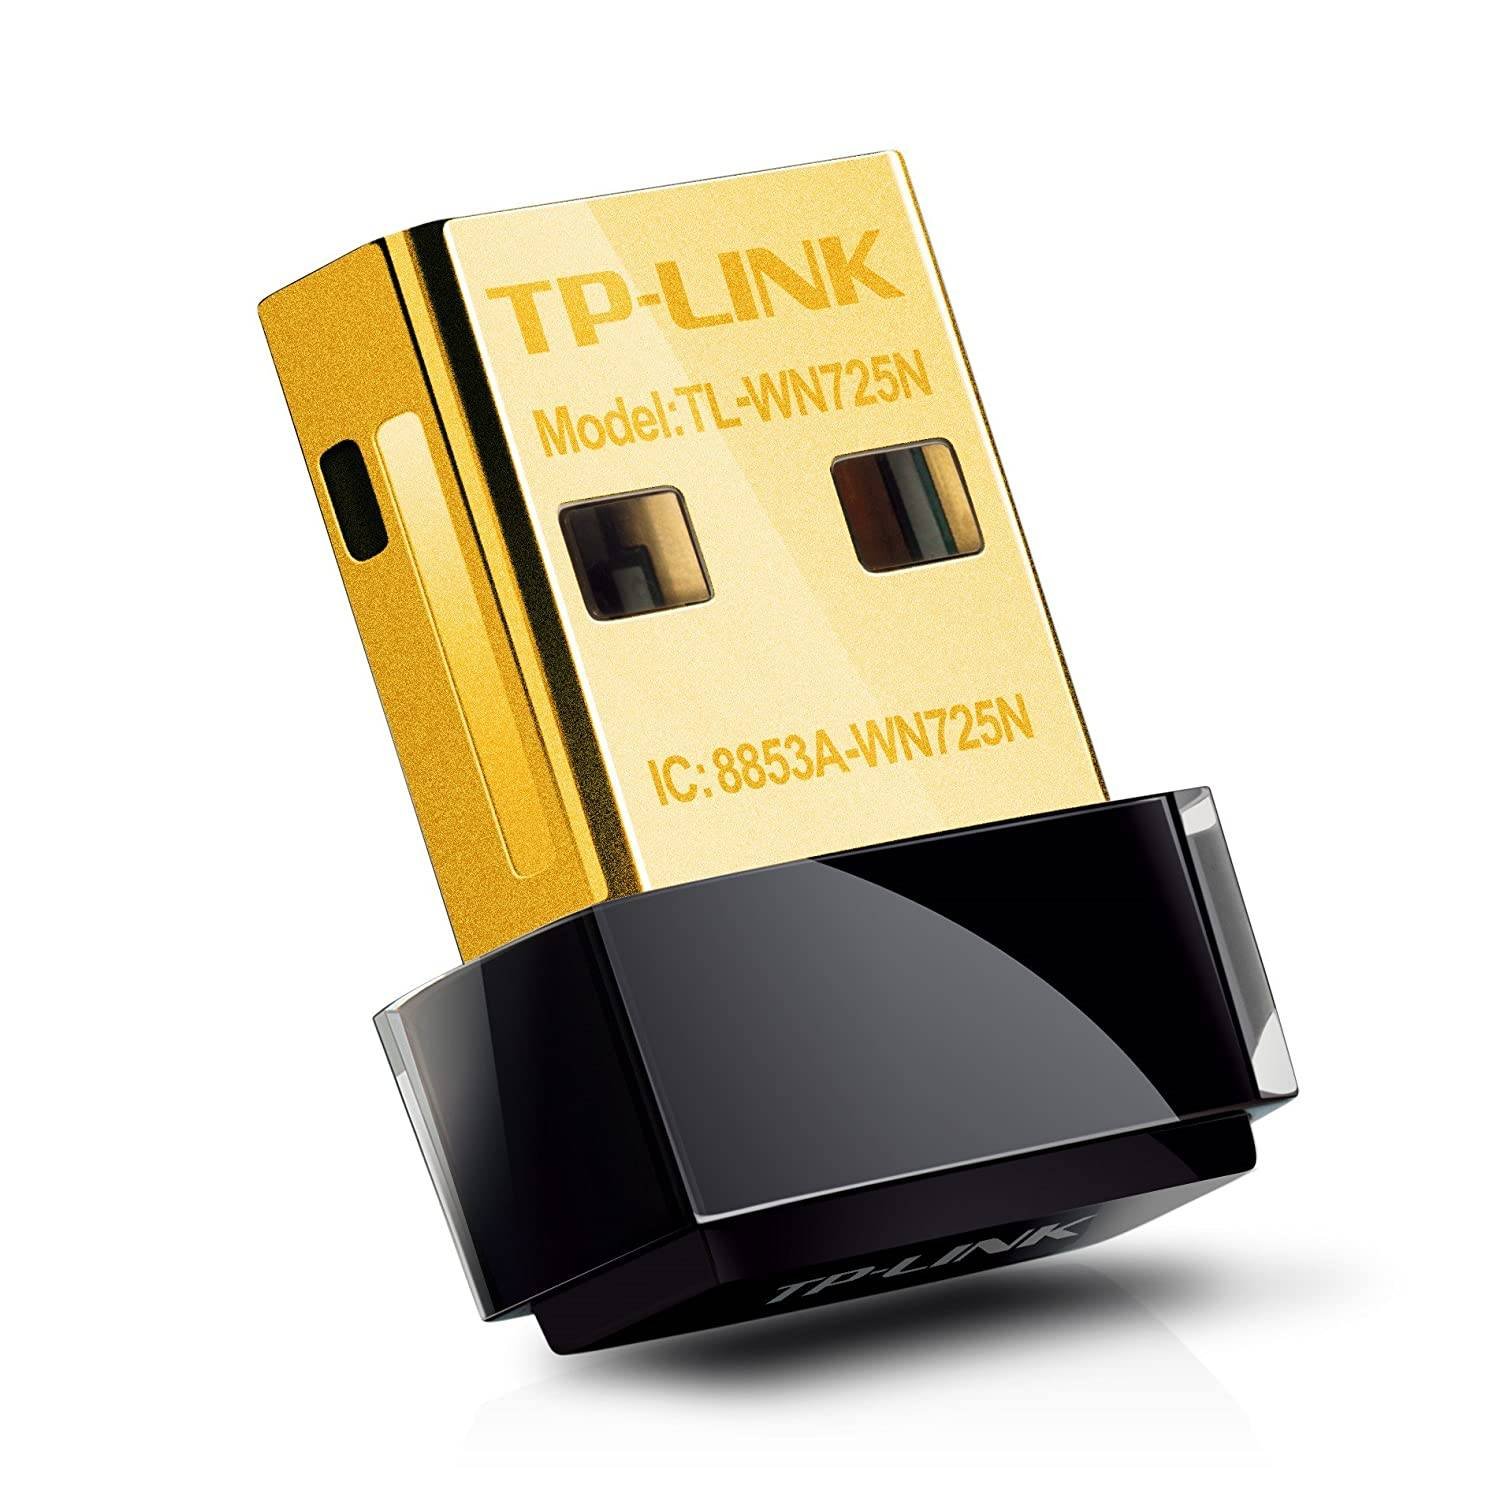 TP-Link TL-WN725N 150Mbps Wireless N Nano USB Adapter, Black